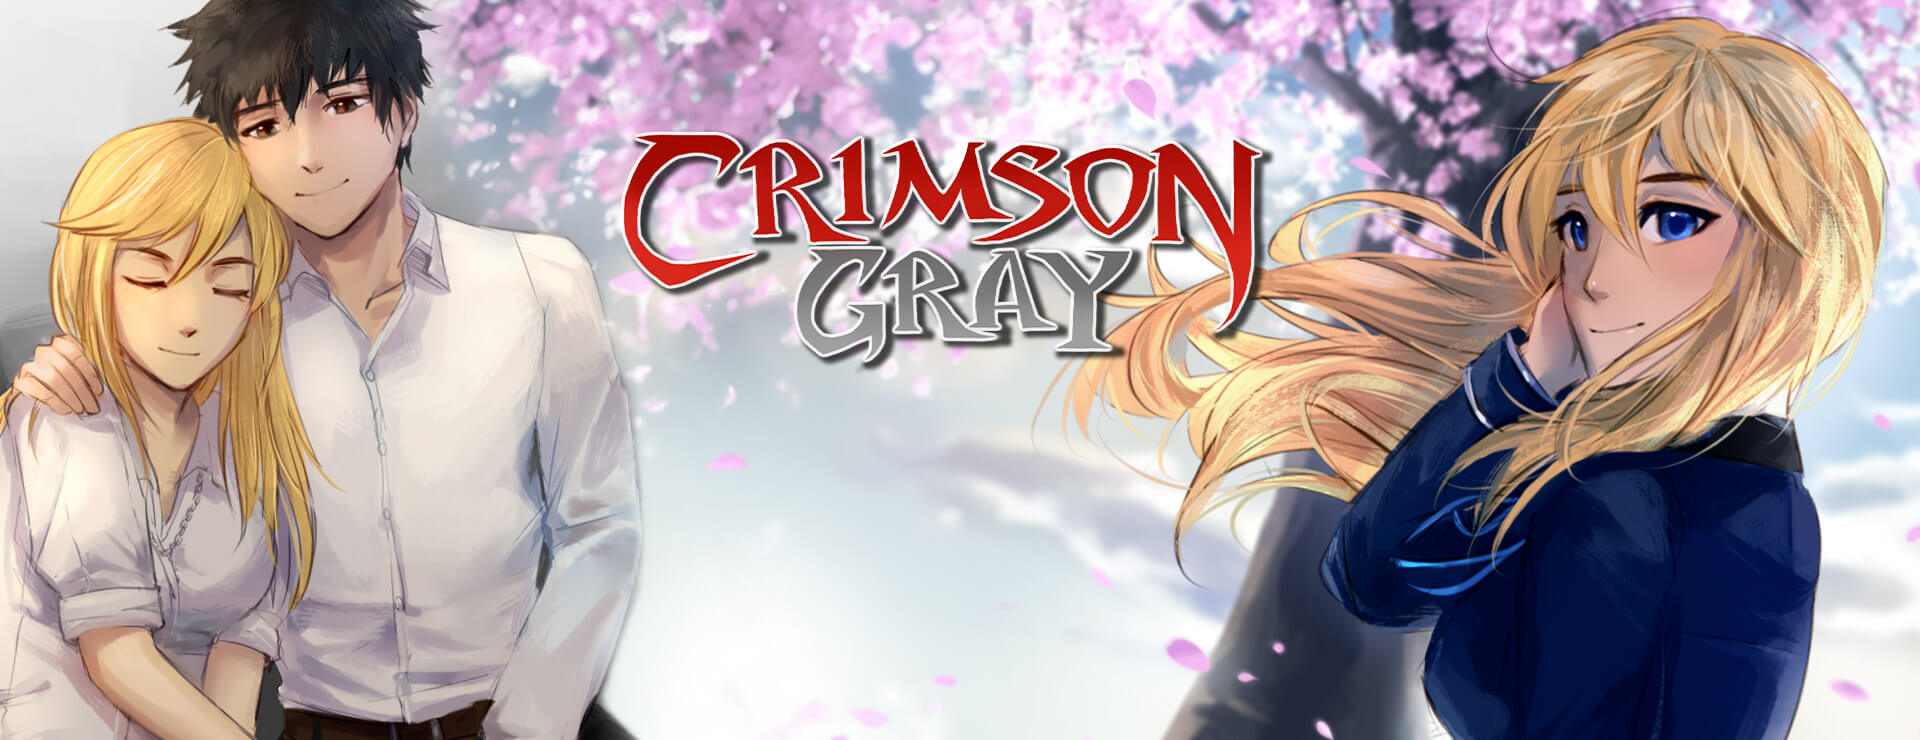 Crimson Gray (SFW Version) - Action Aventure Jeu